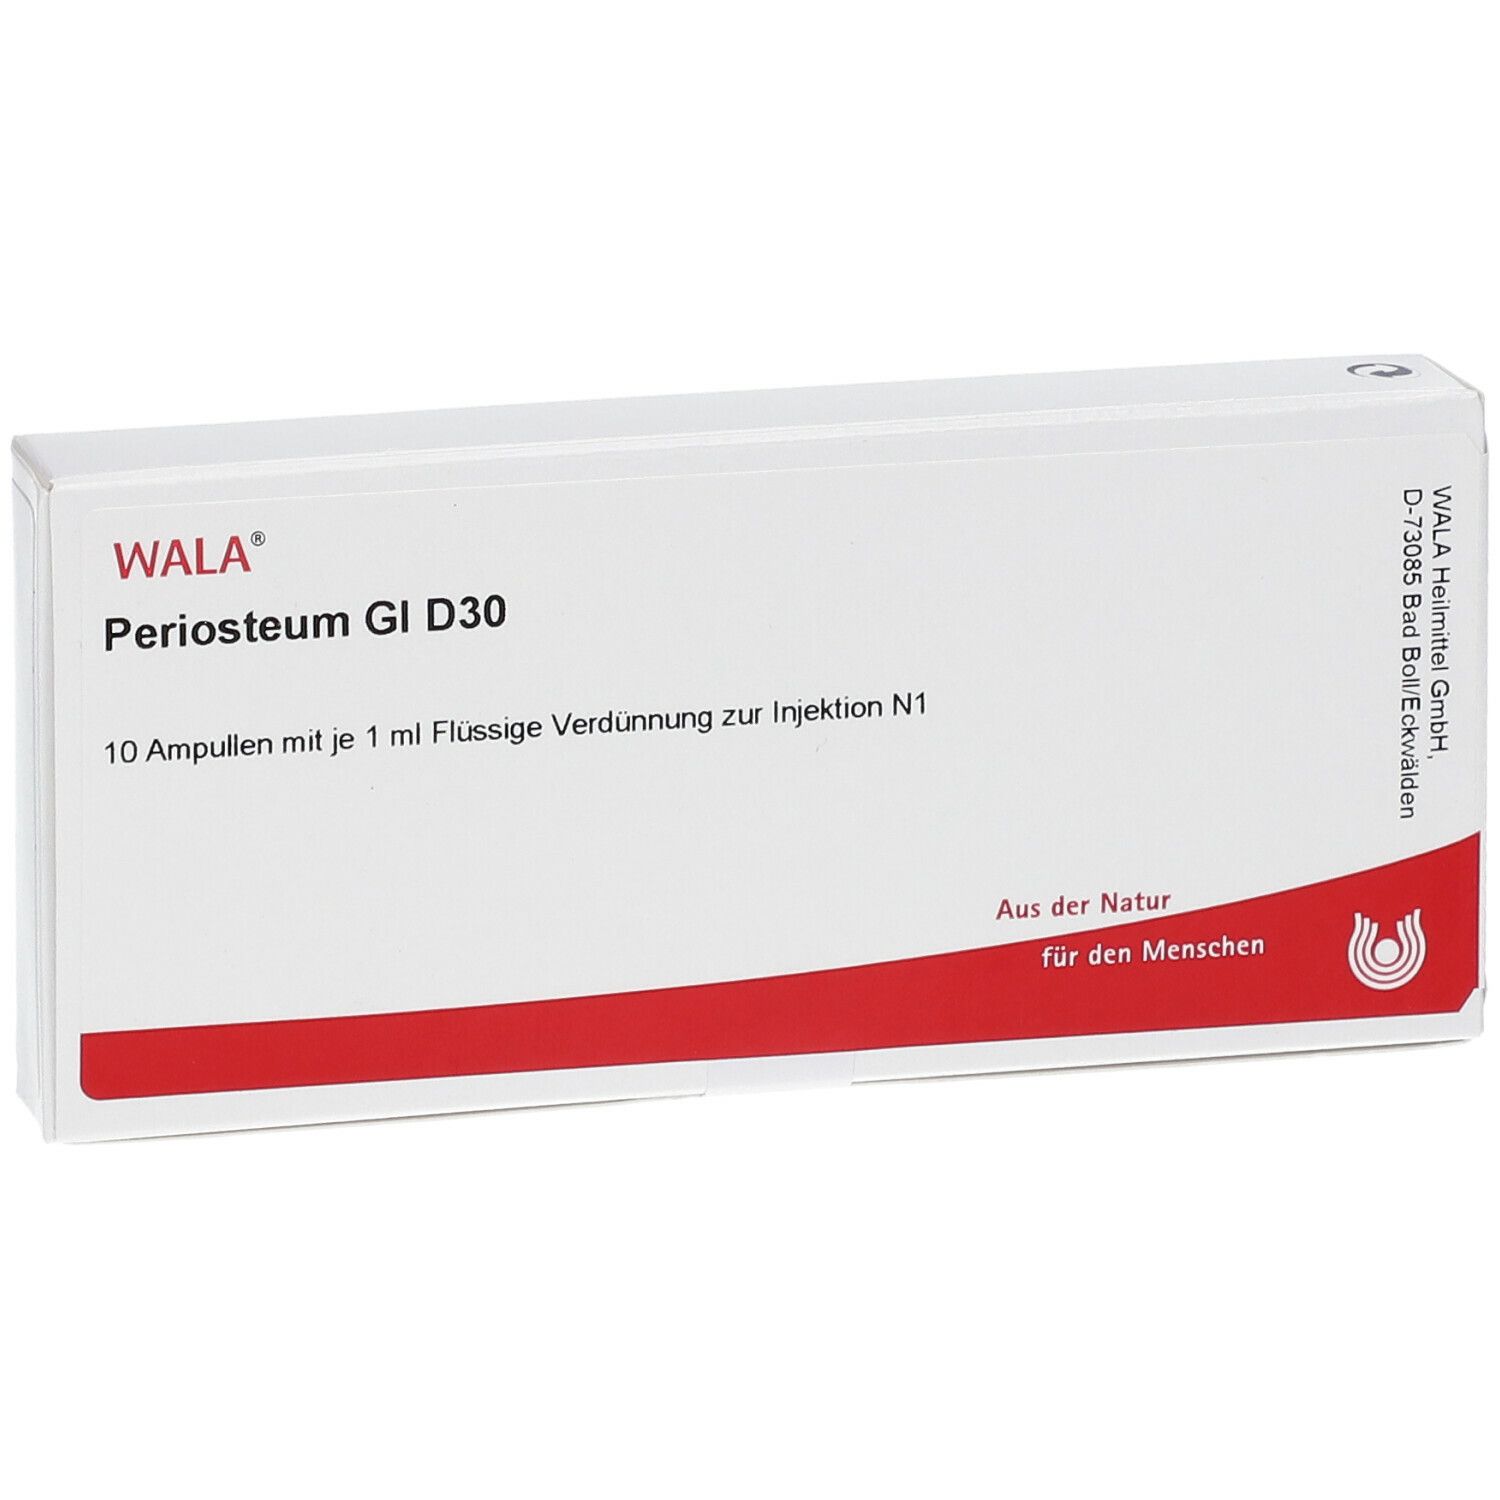 WALA® Periosteum Gl D 30